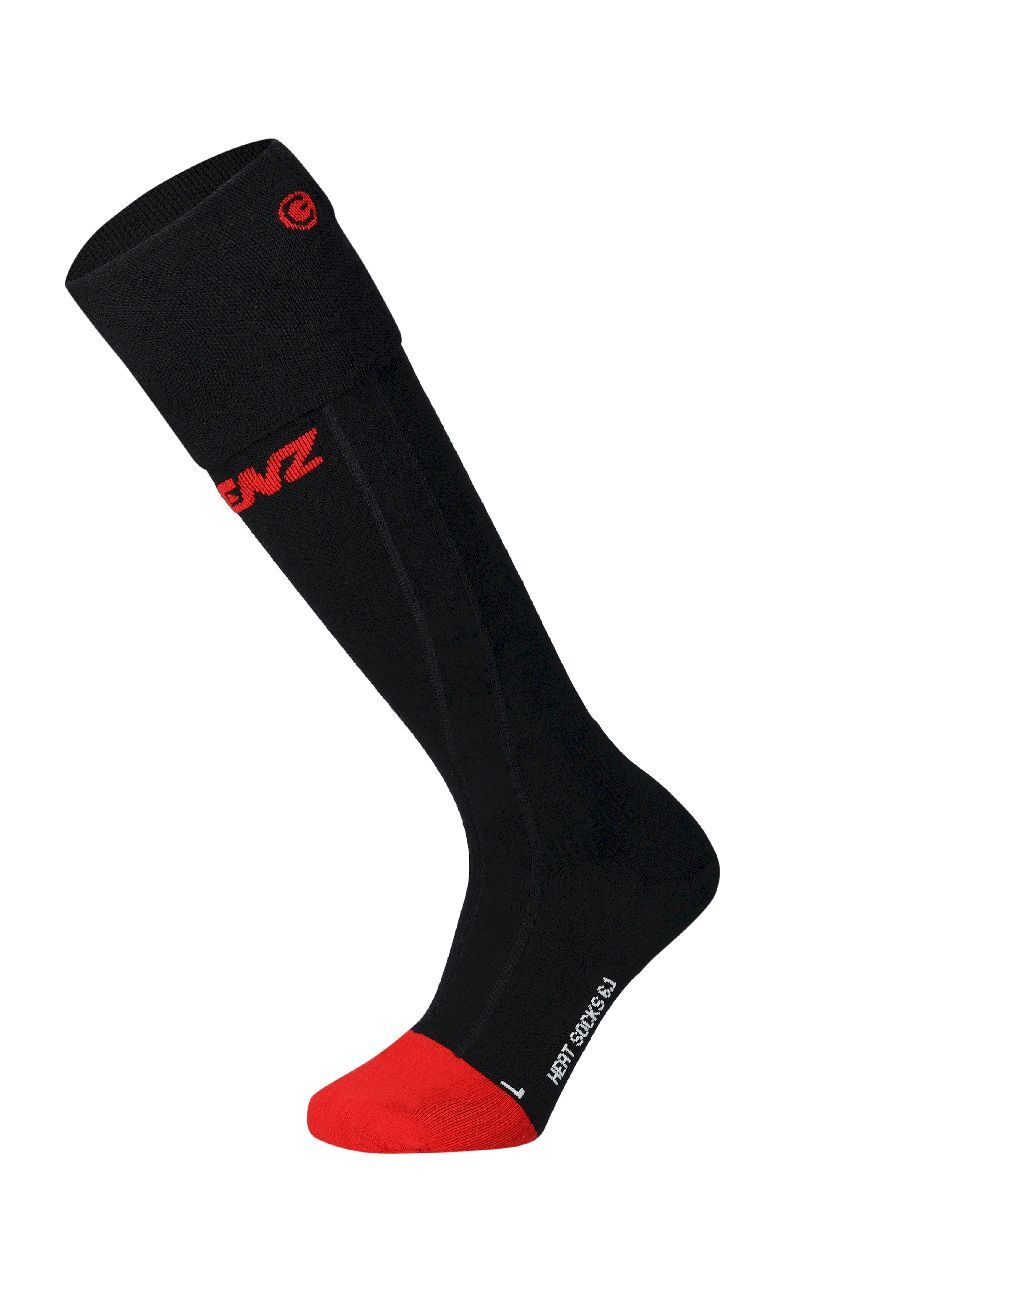 Lenz Heat Sock 6.1 Merino Compression - Skisocken